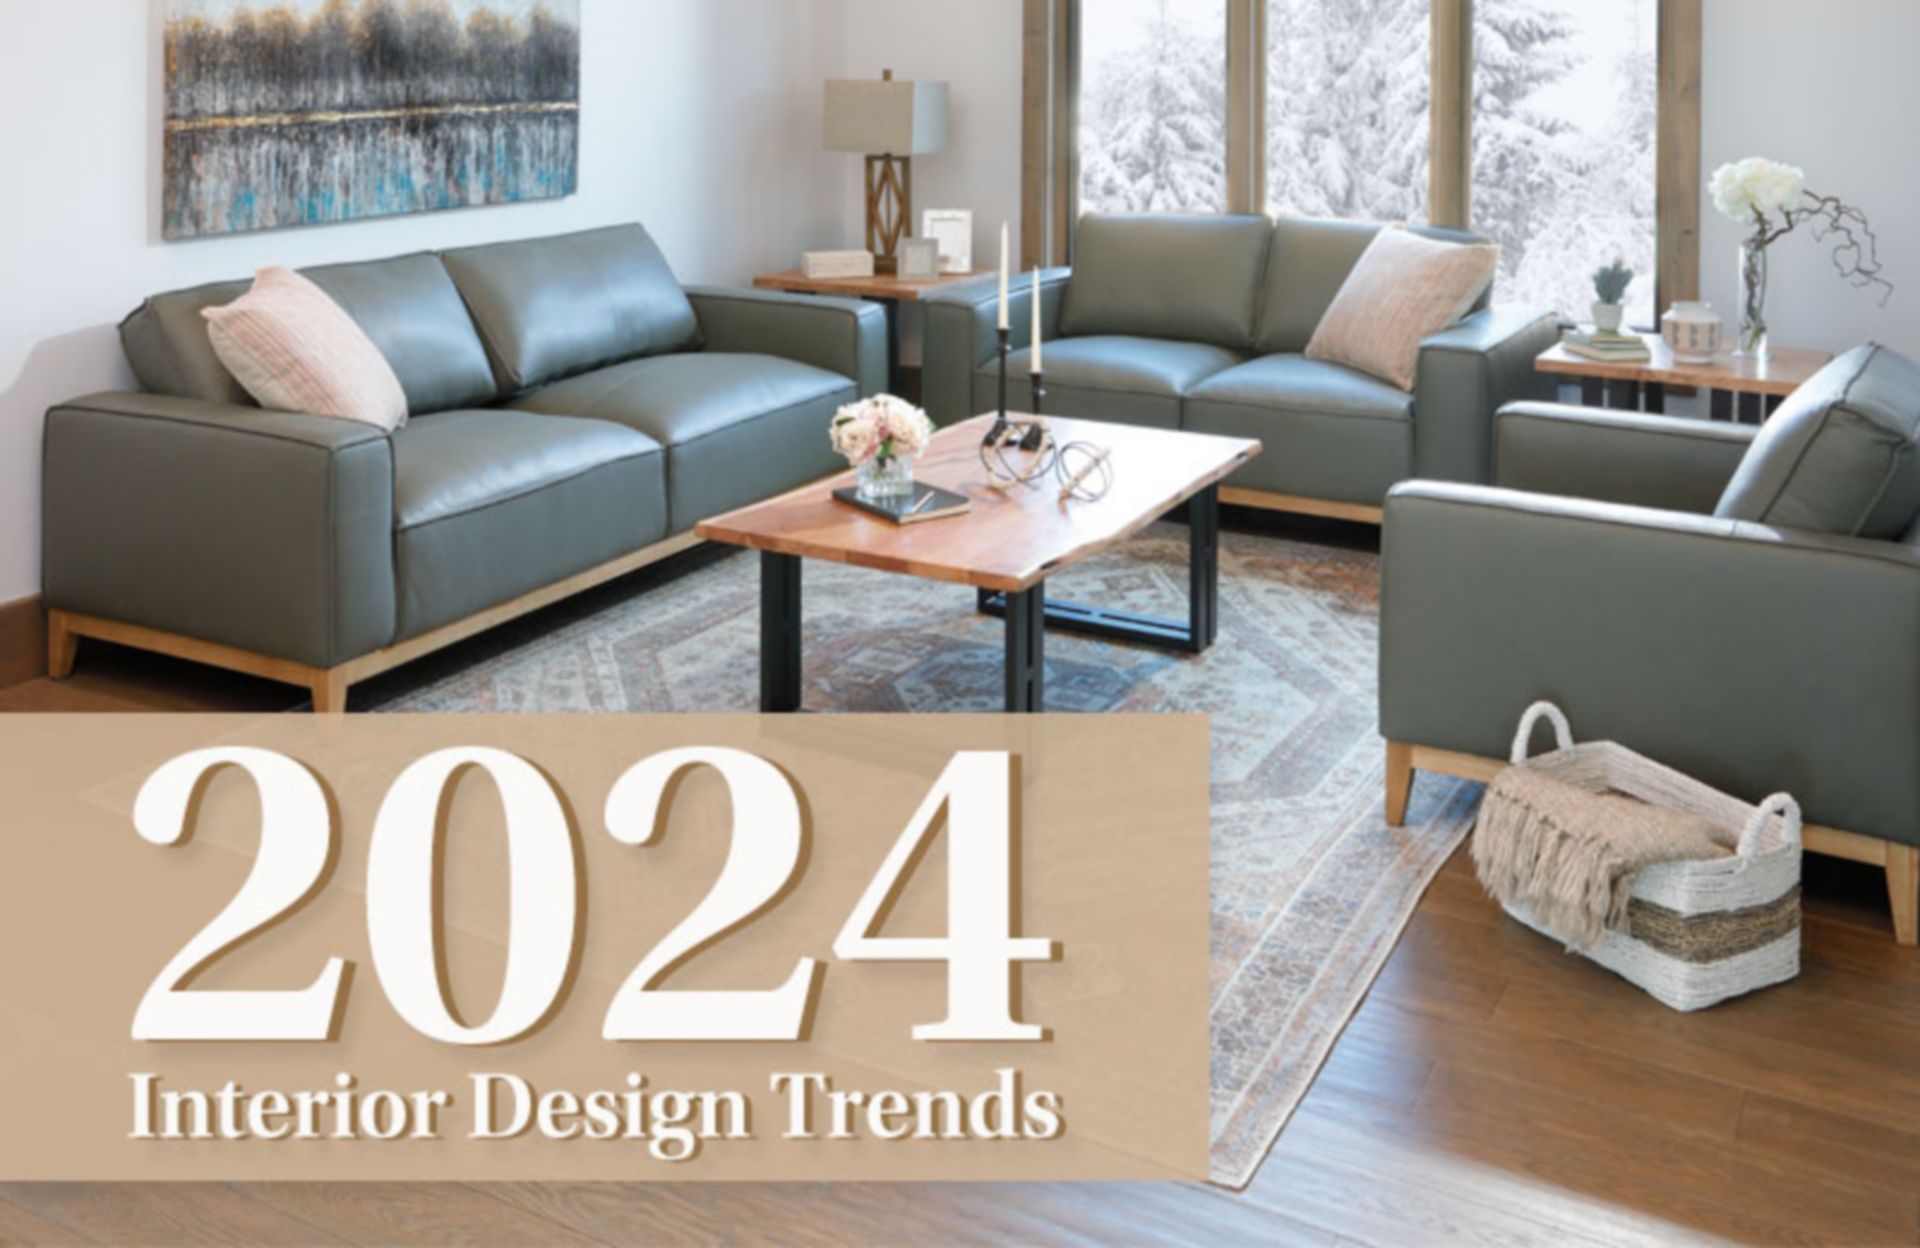 2024 Interior Design Trends. Sage Colored Leather Sofa Set.